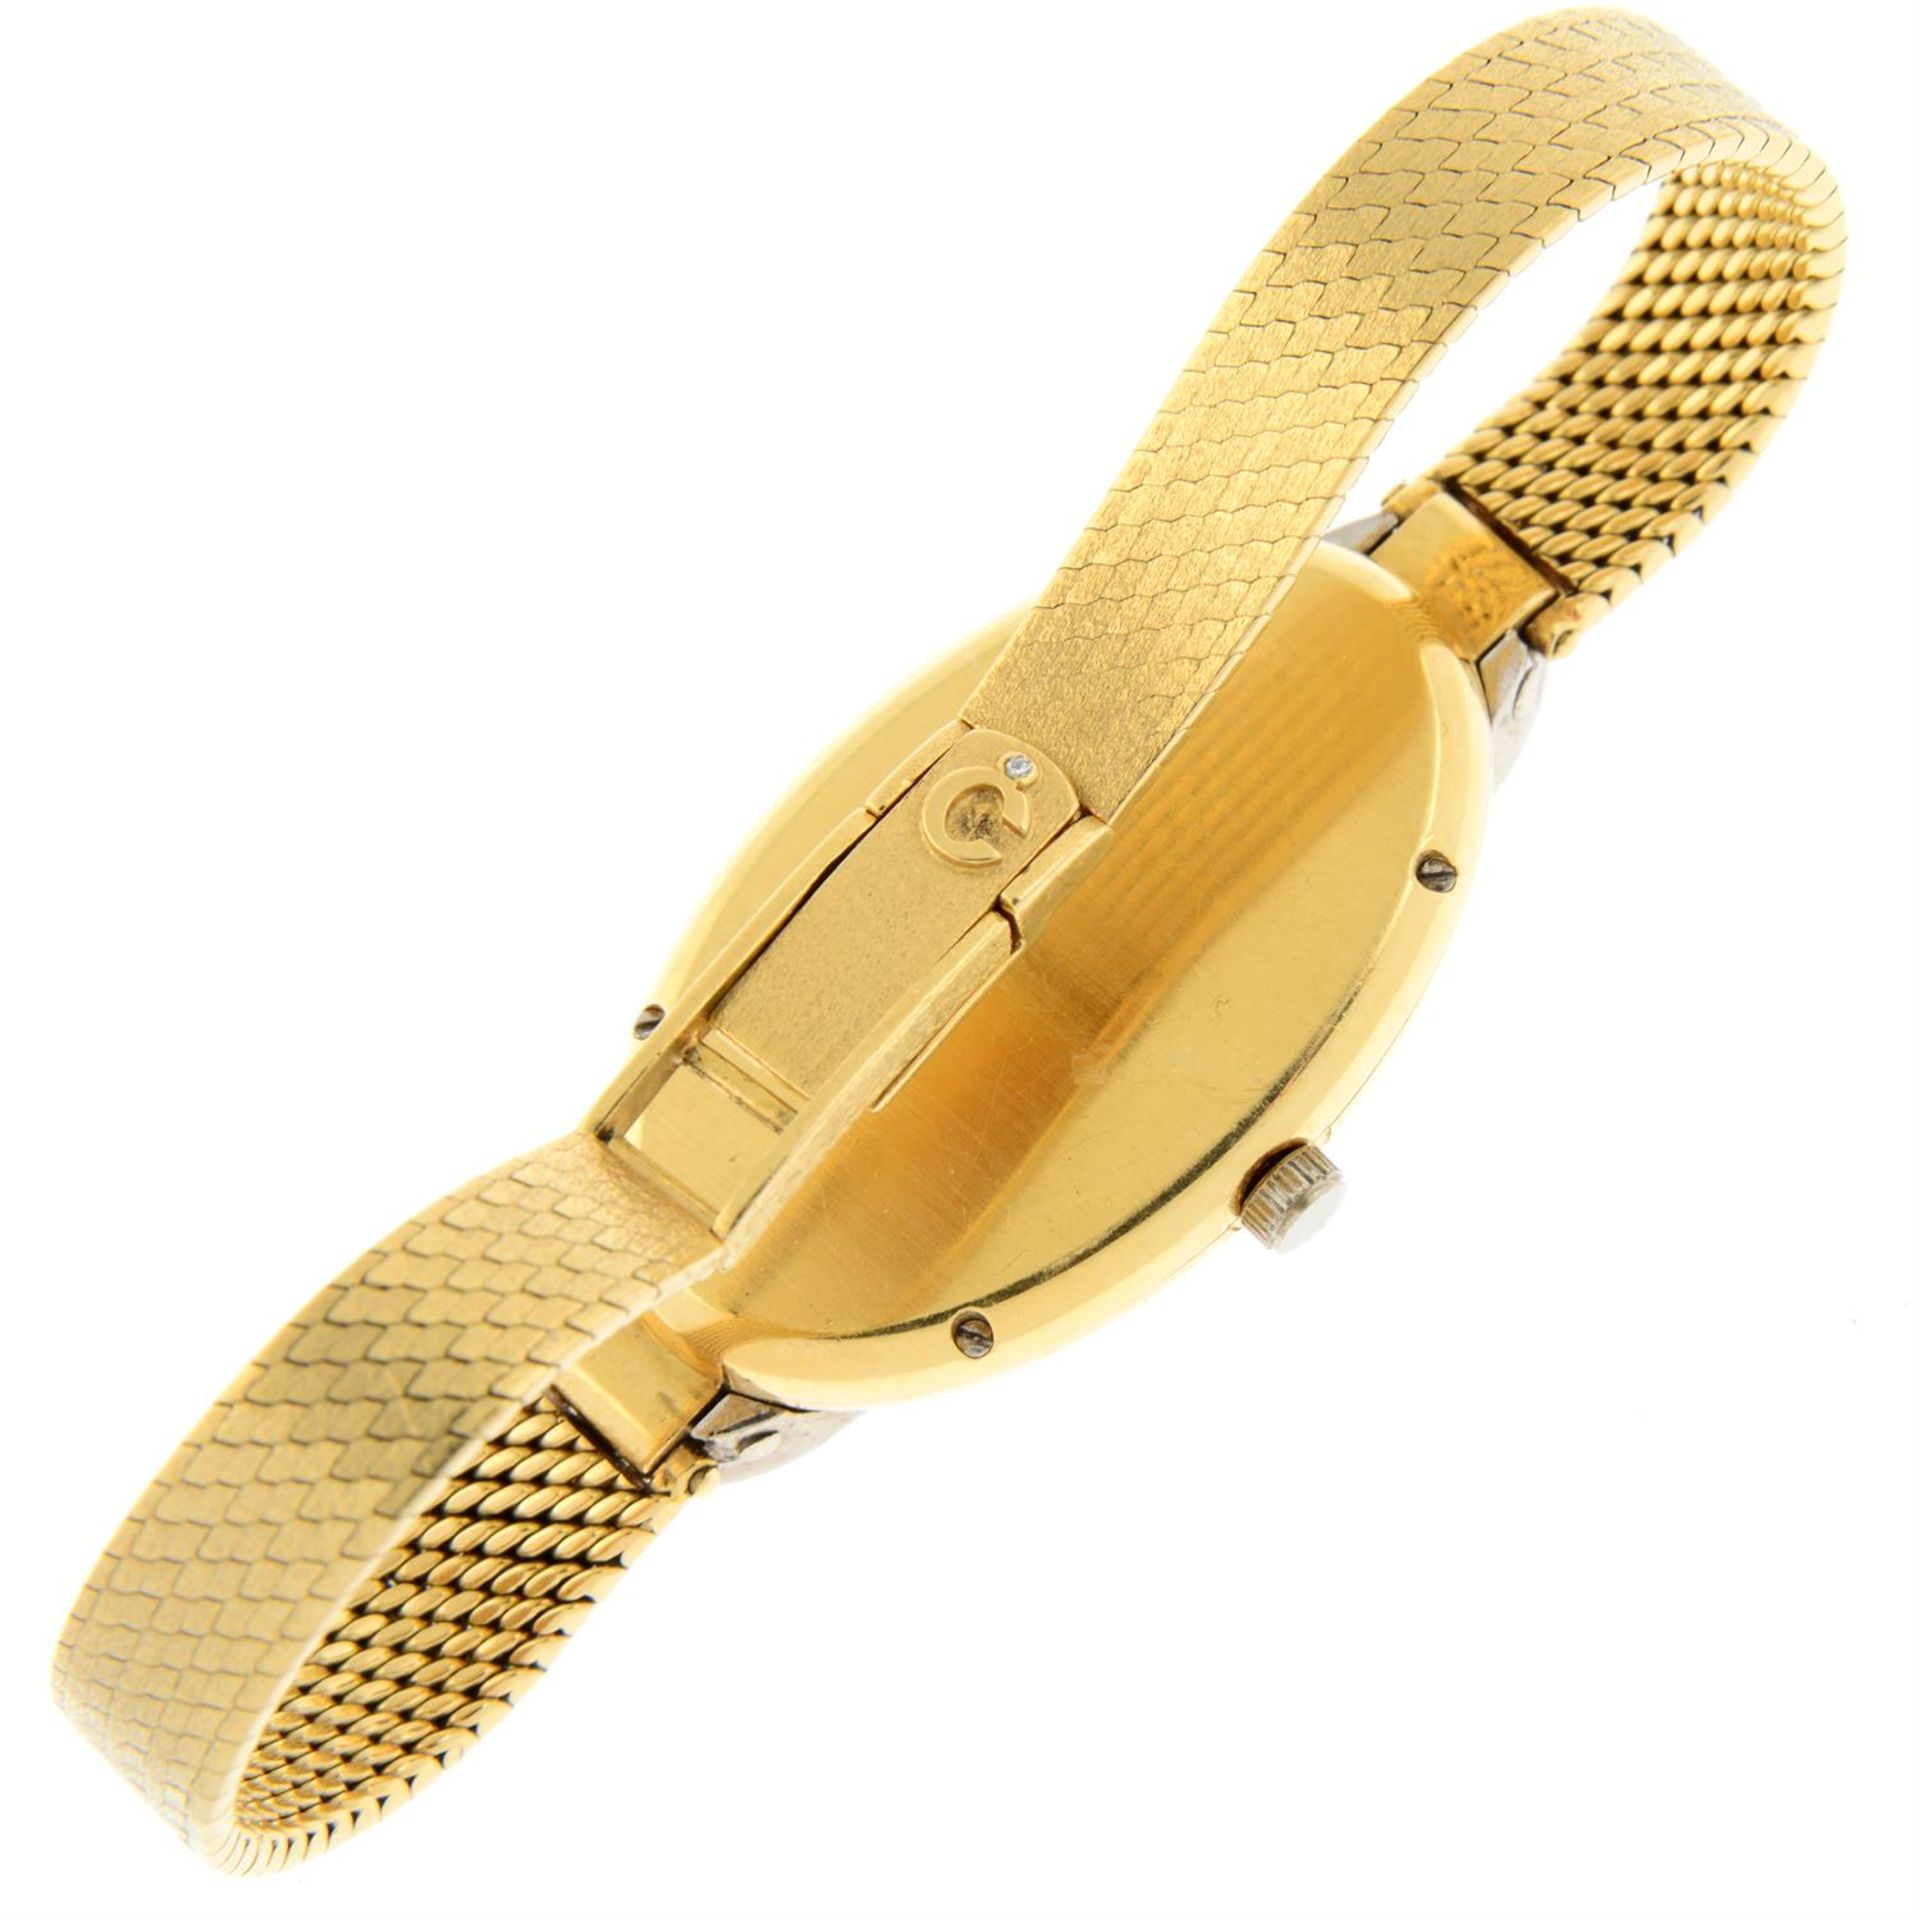 CHOPARD - a yellow metal diamond set bracelet watch, 22mm. - Image 2 of 5